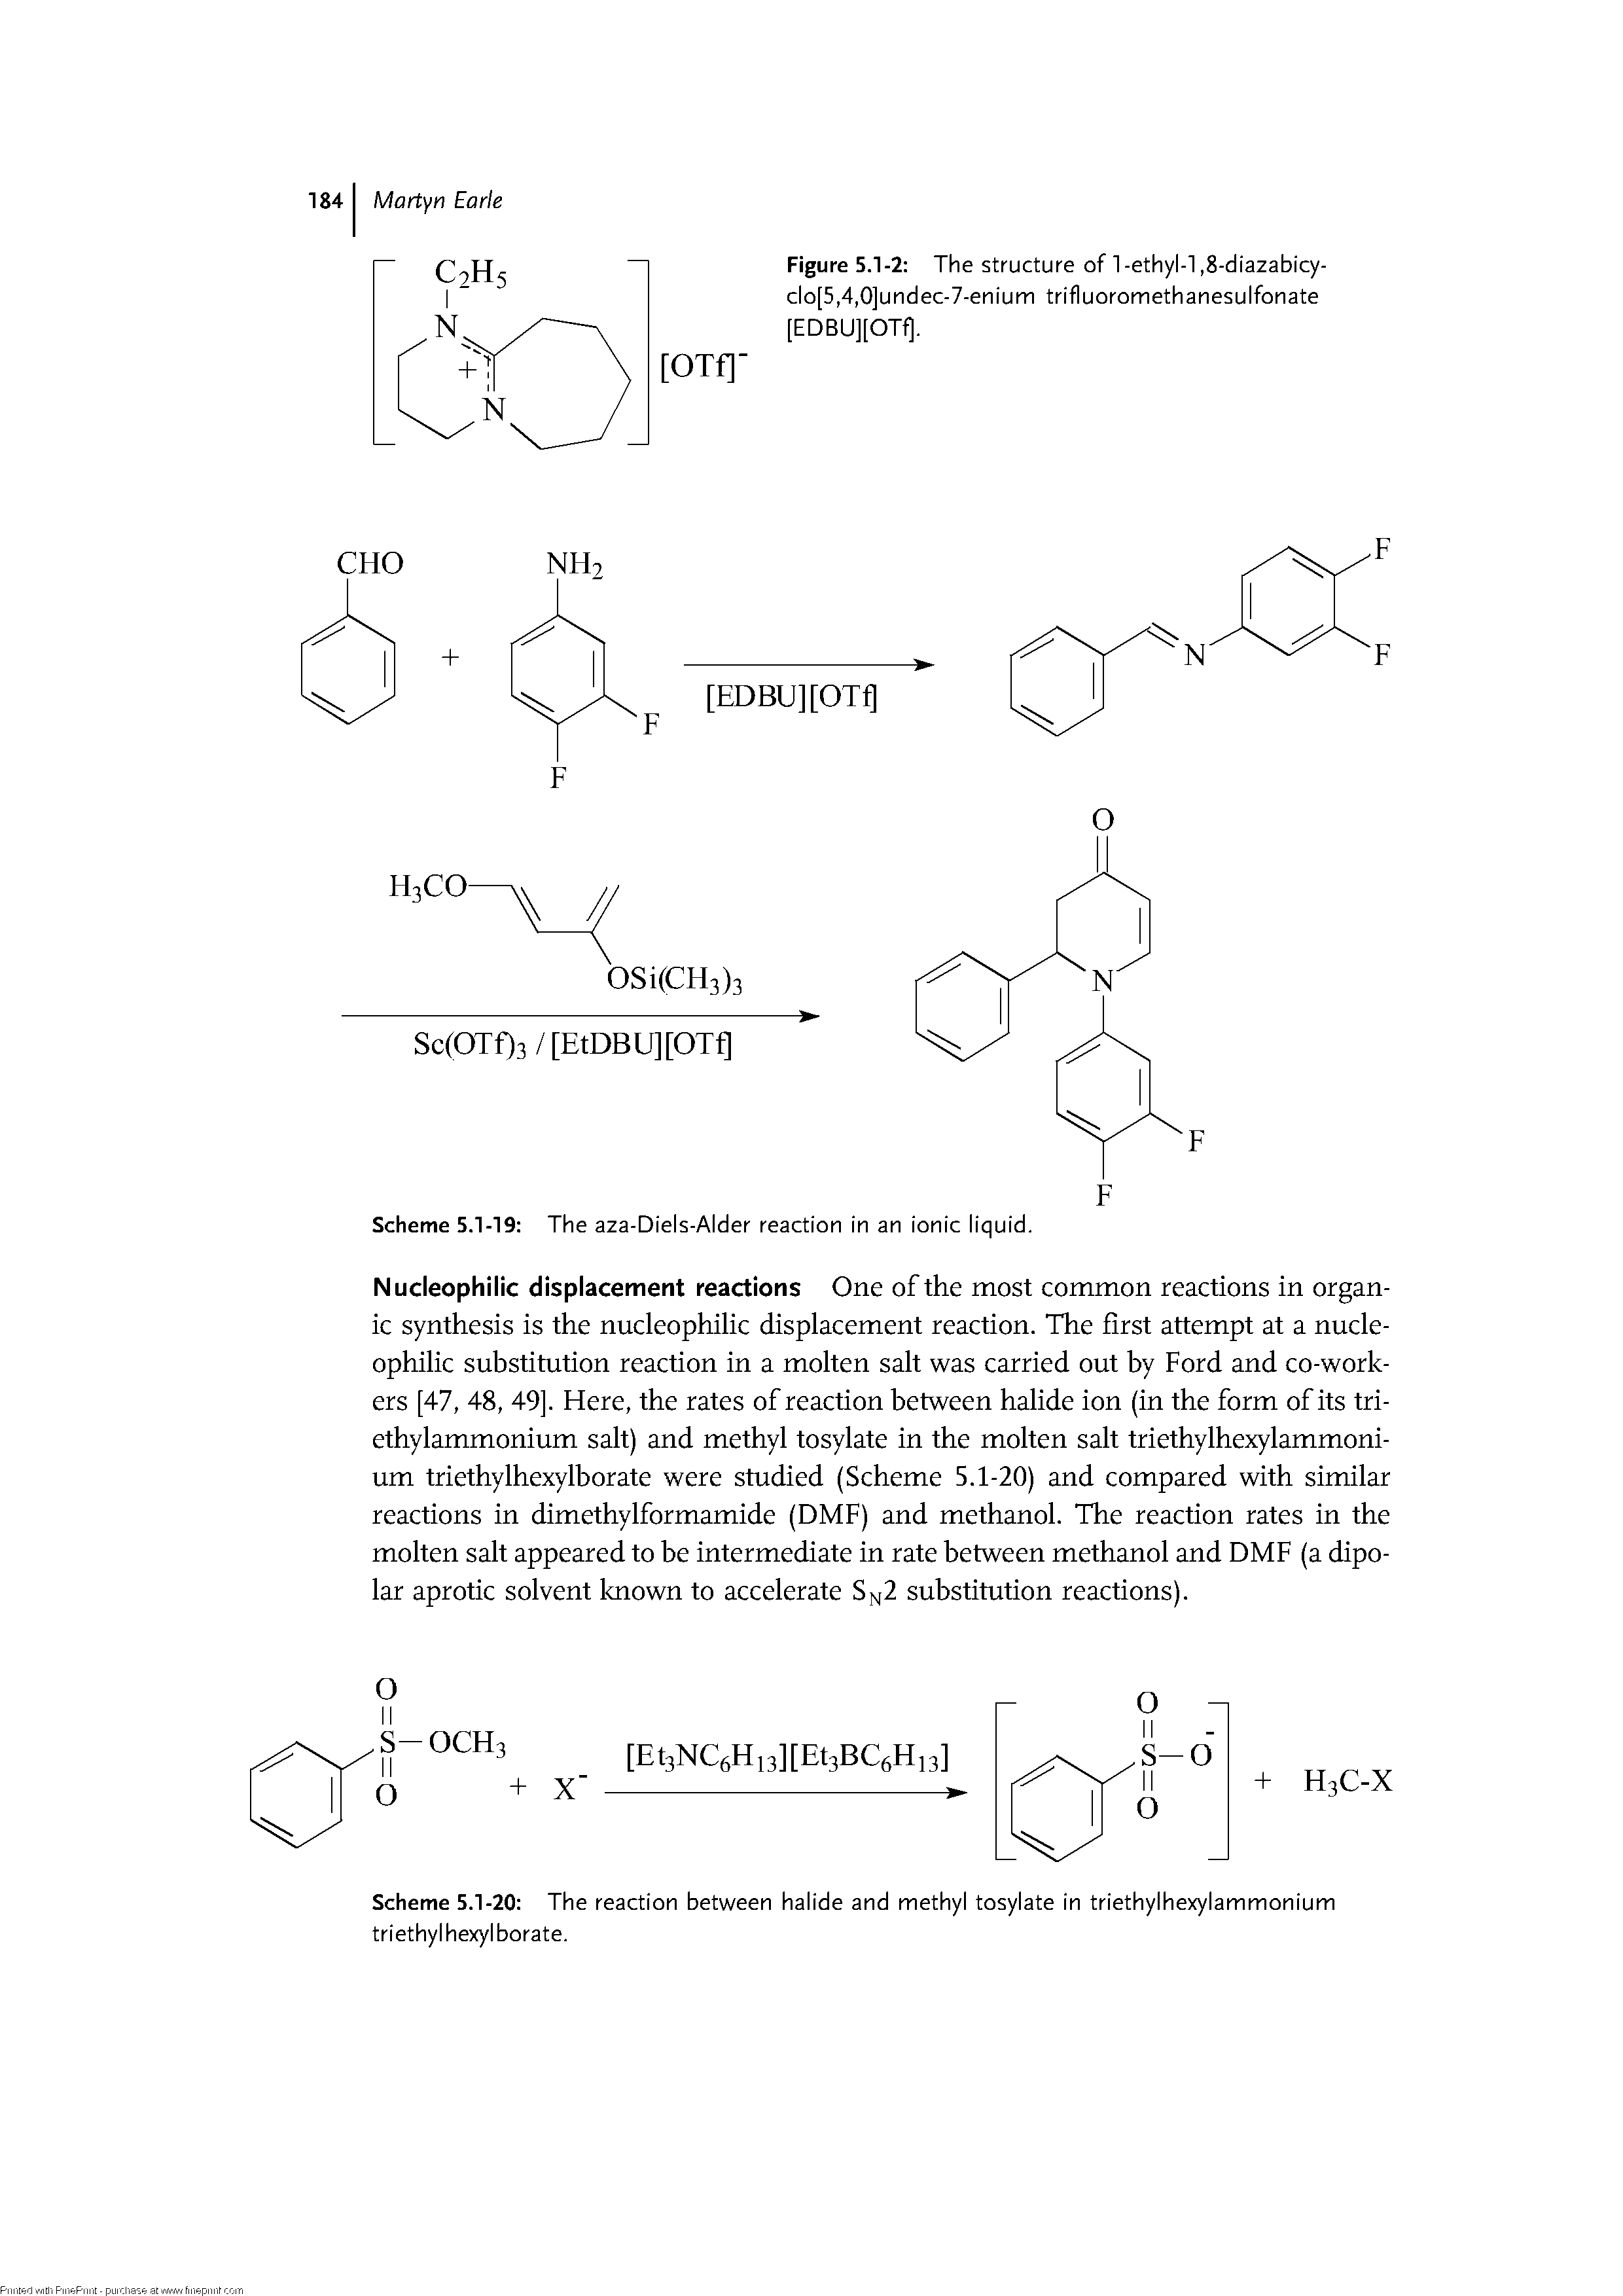 Scheme 5.1-19 The aza-Diels-Alder reaction in an ionic liquid.